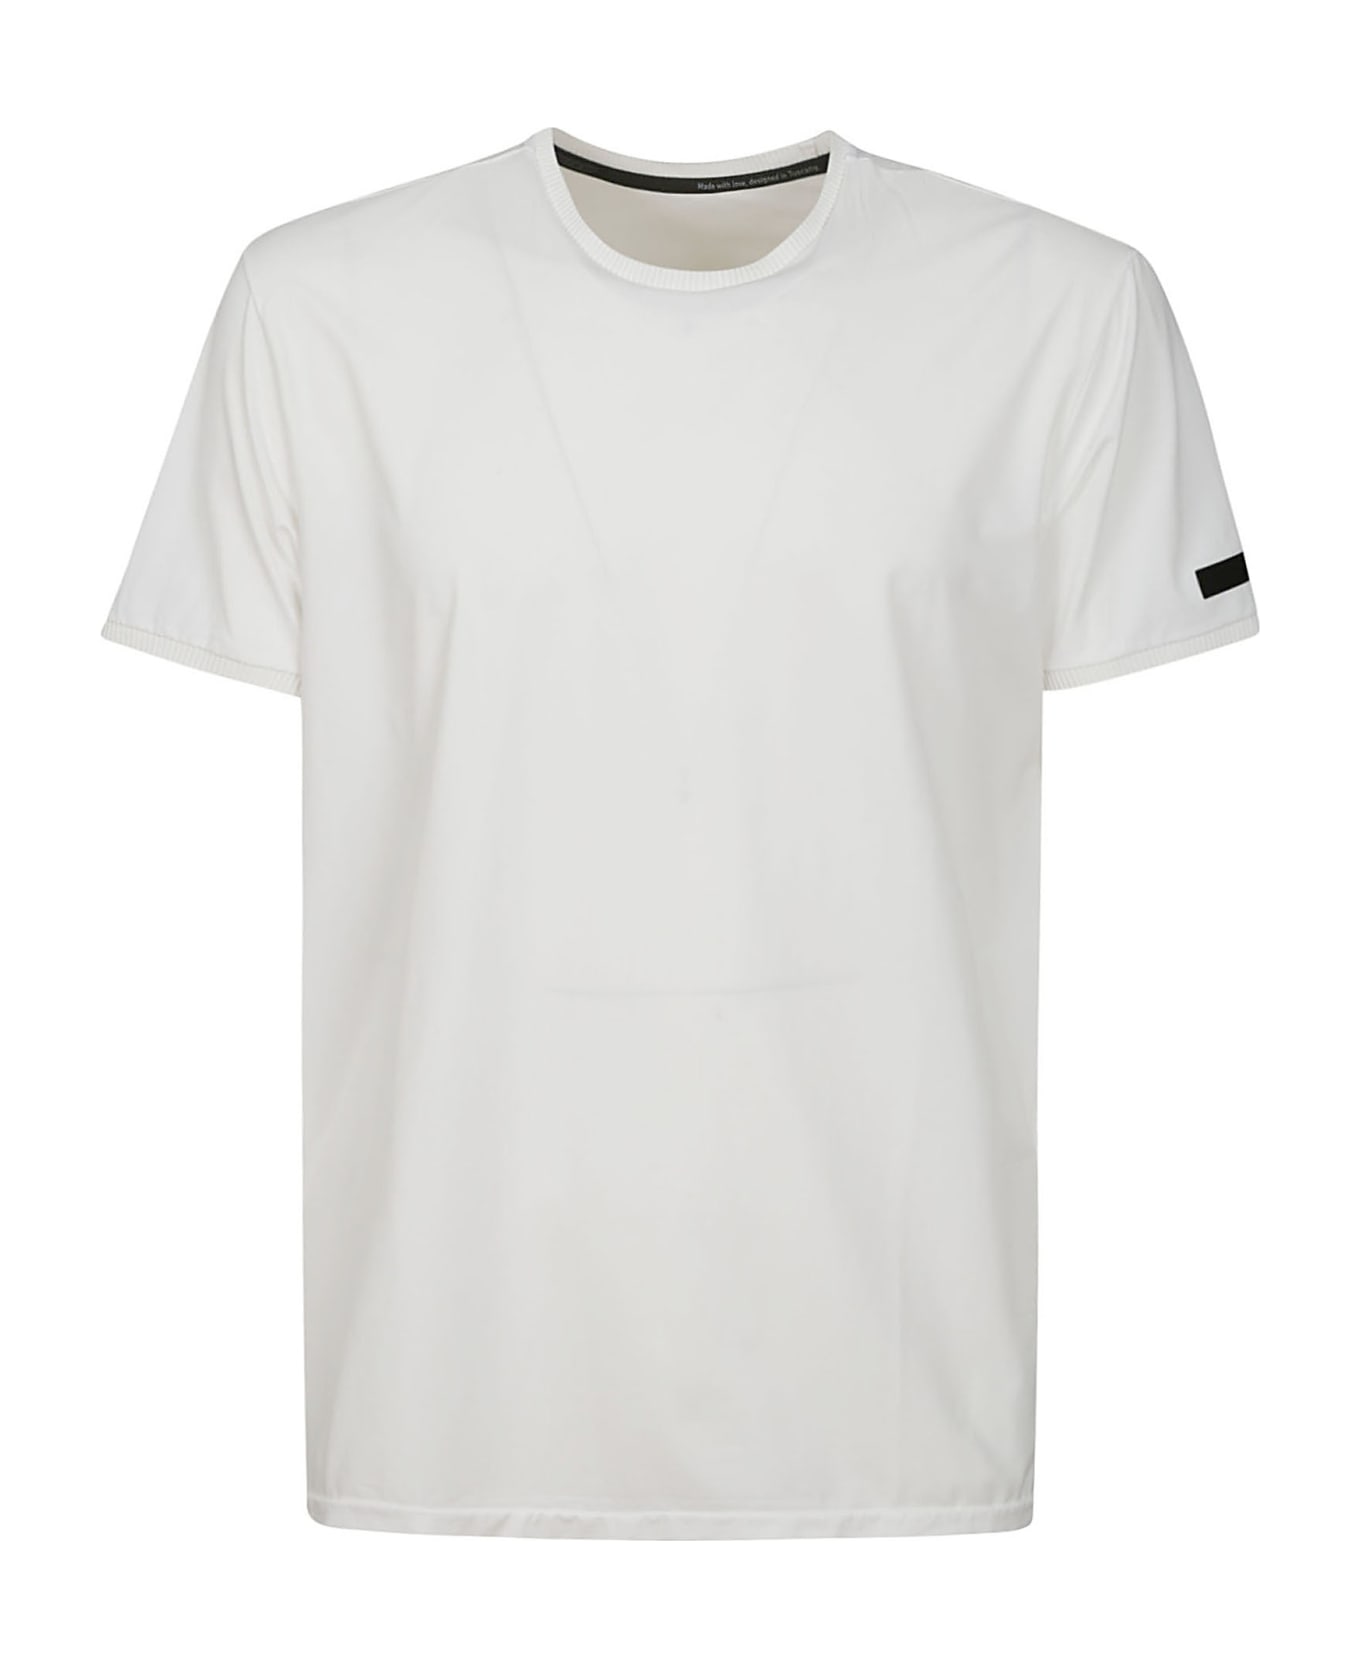 RRD - Roberto Ricci Design Oxford Gdy Shirty - White